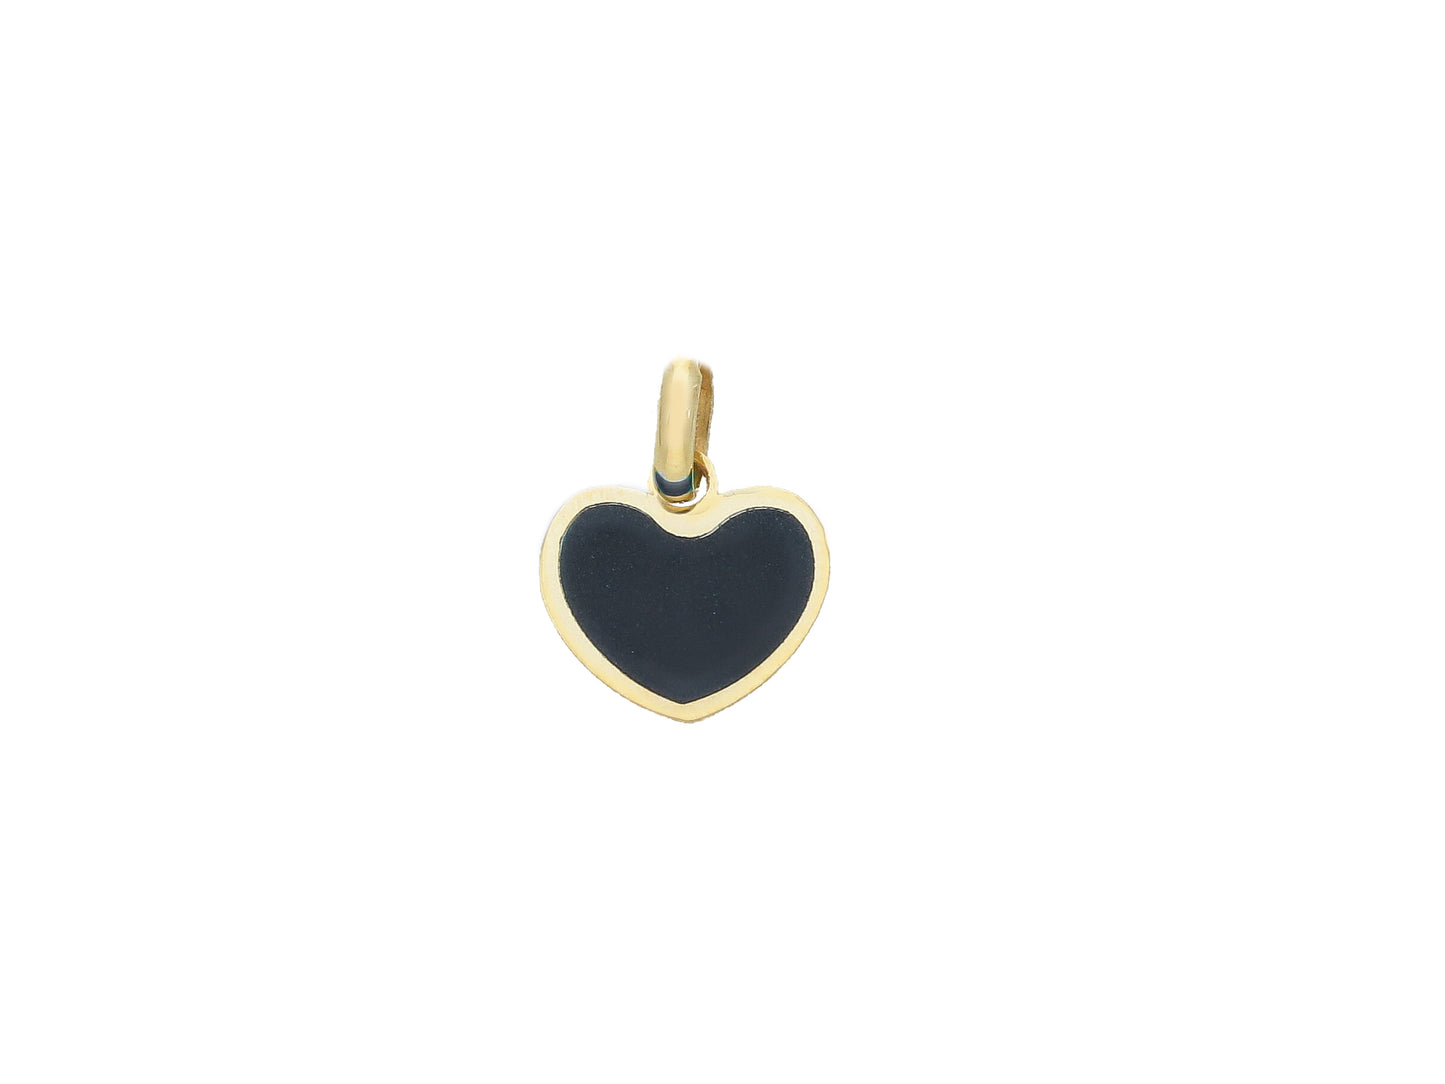 Heart Black pendant